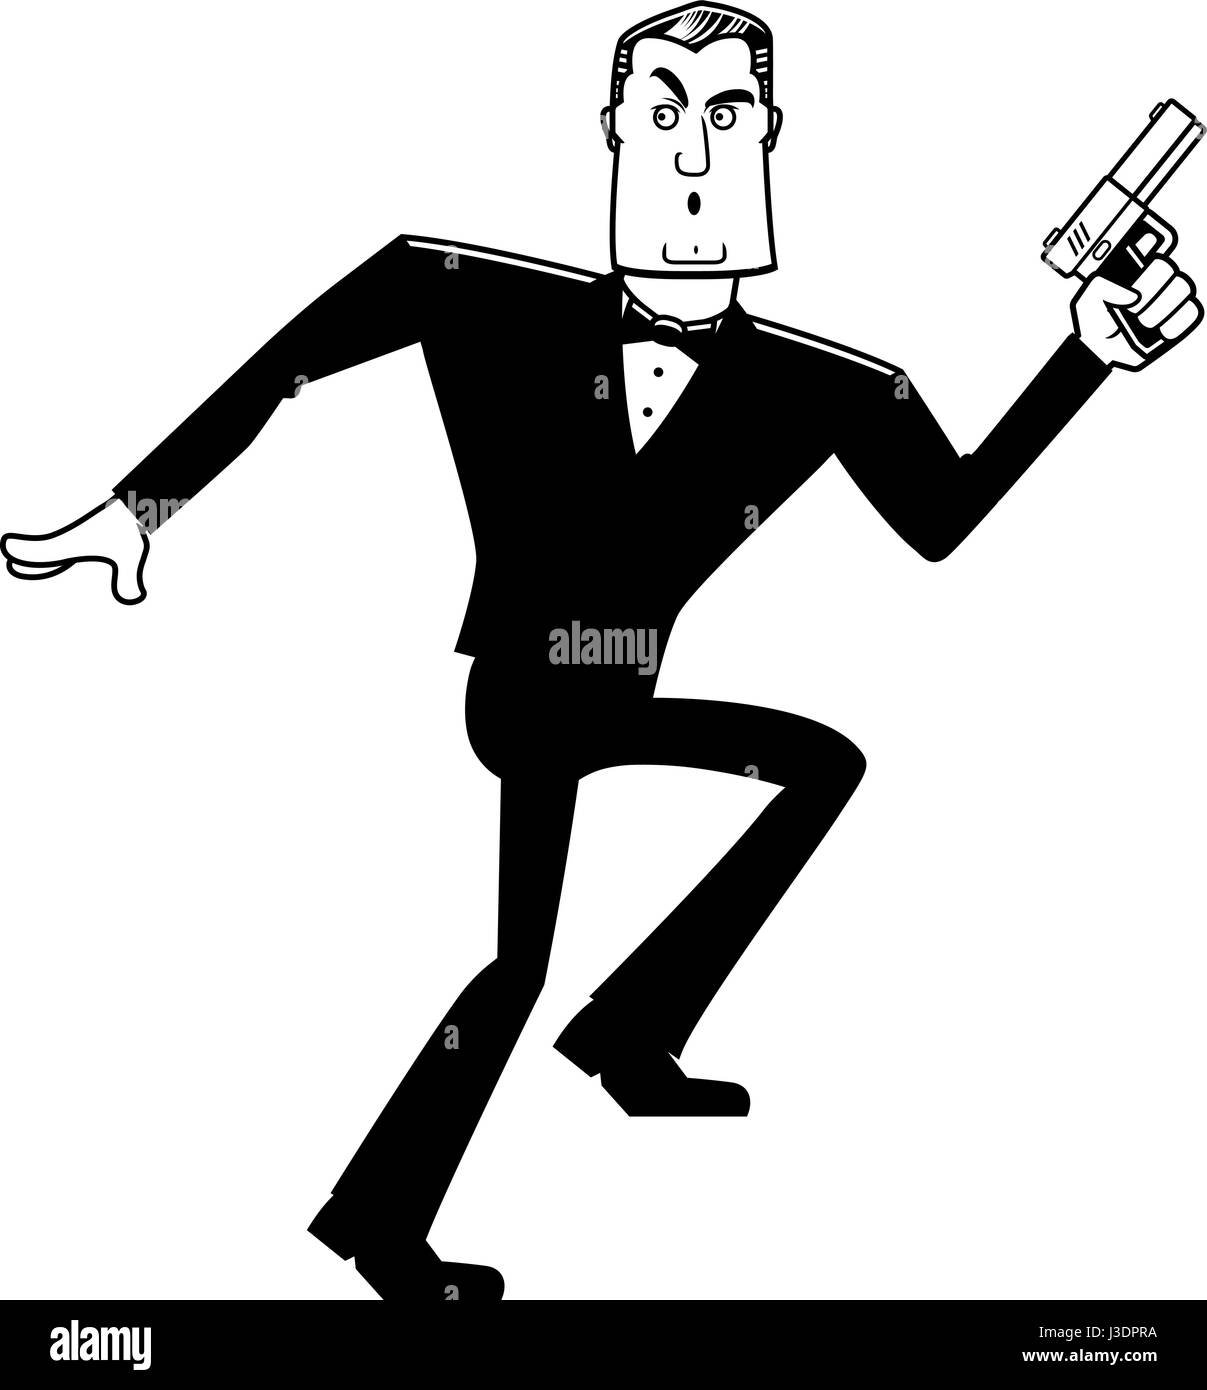 A cartoon illustration of a spy in a tuxedo sneaking. Stock Vector